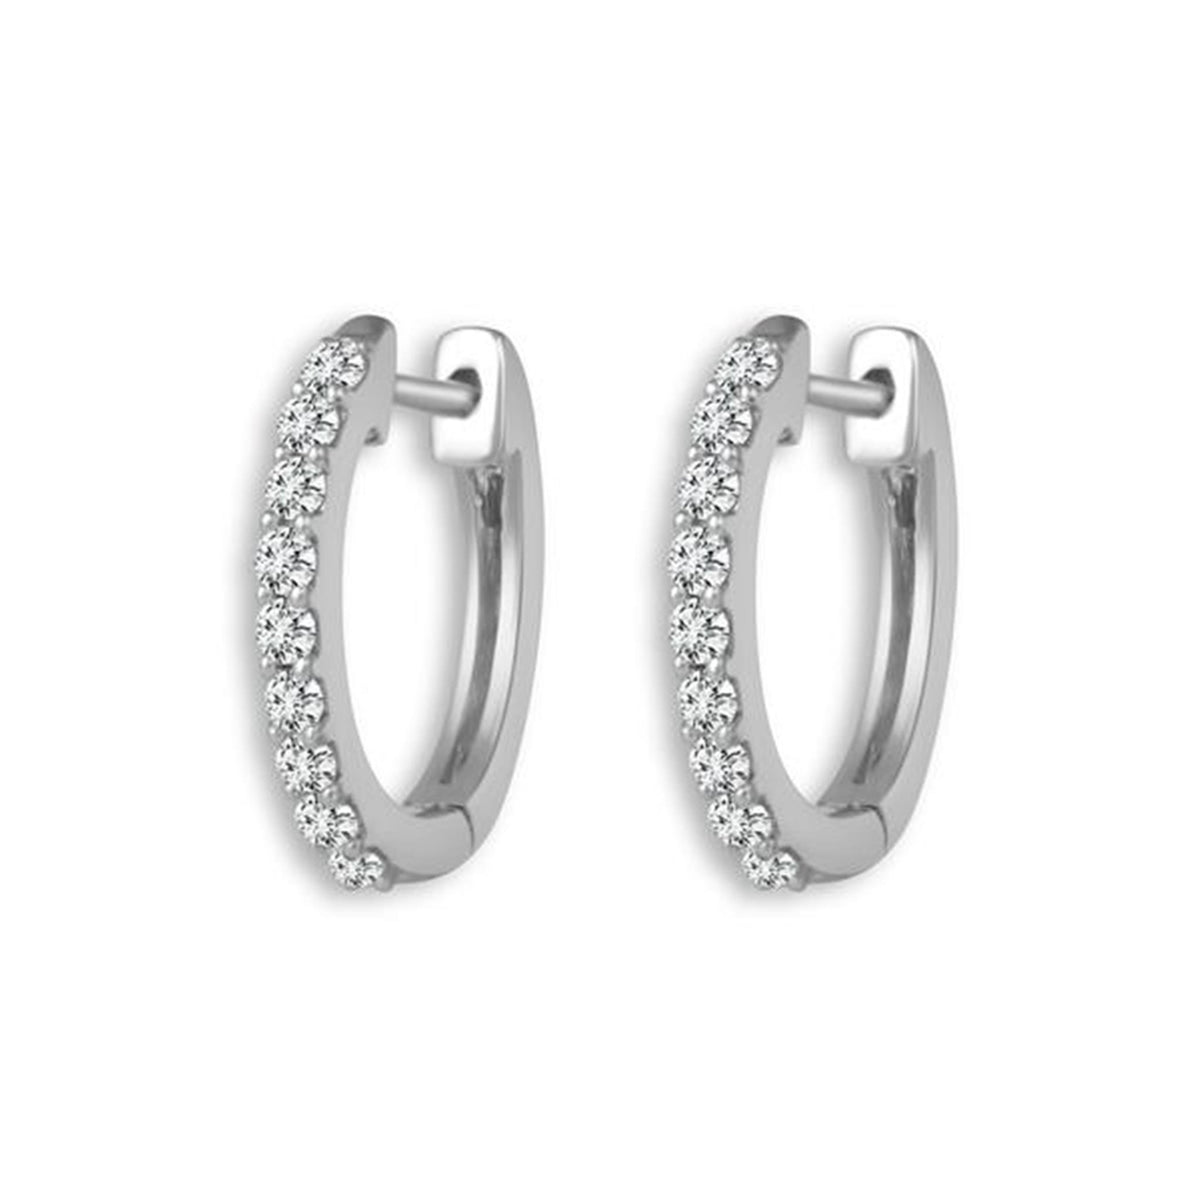 14Kt White Gold  Hoop Earrings 0.16cttw Natural Diamonds